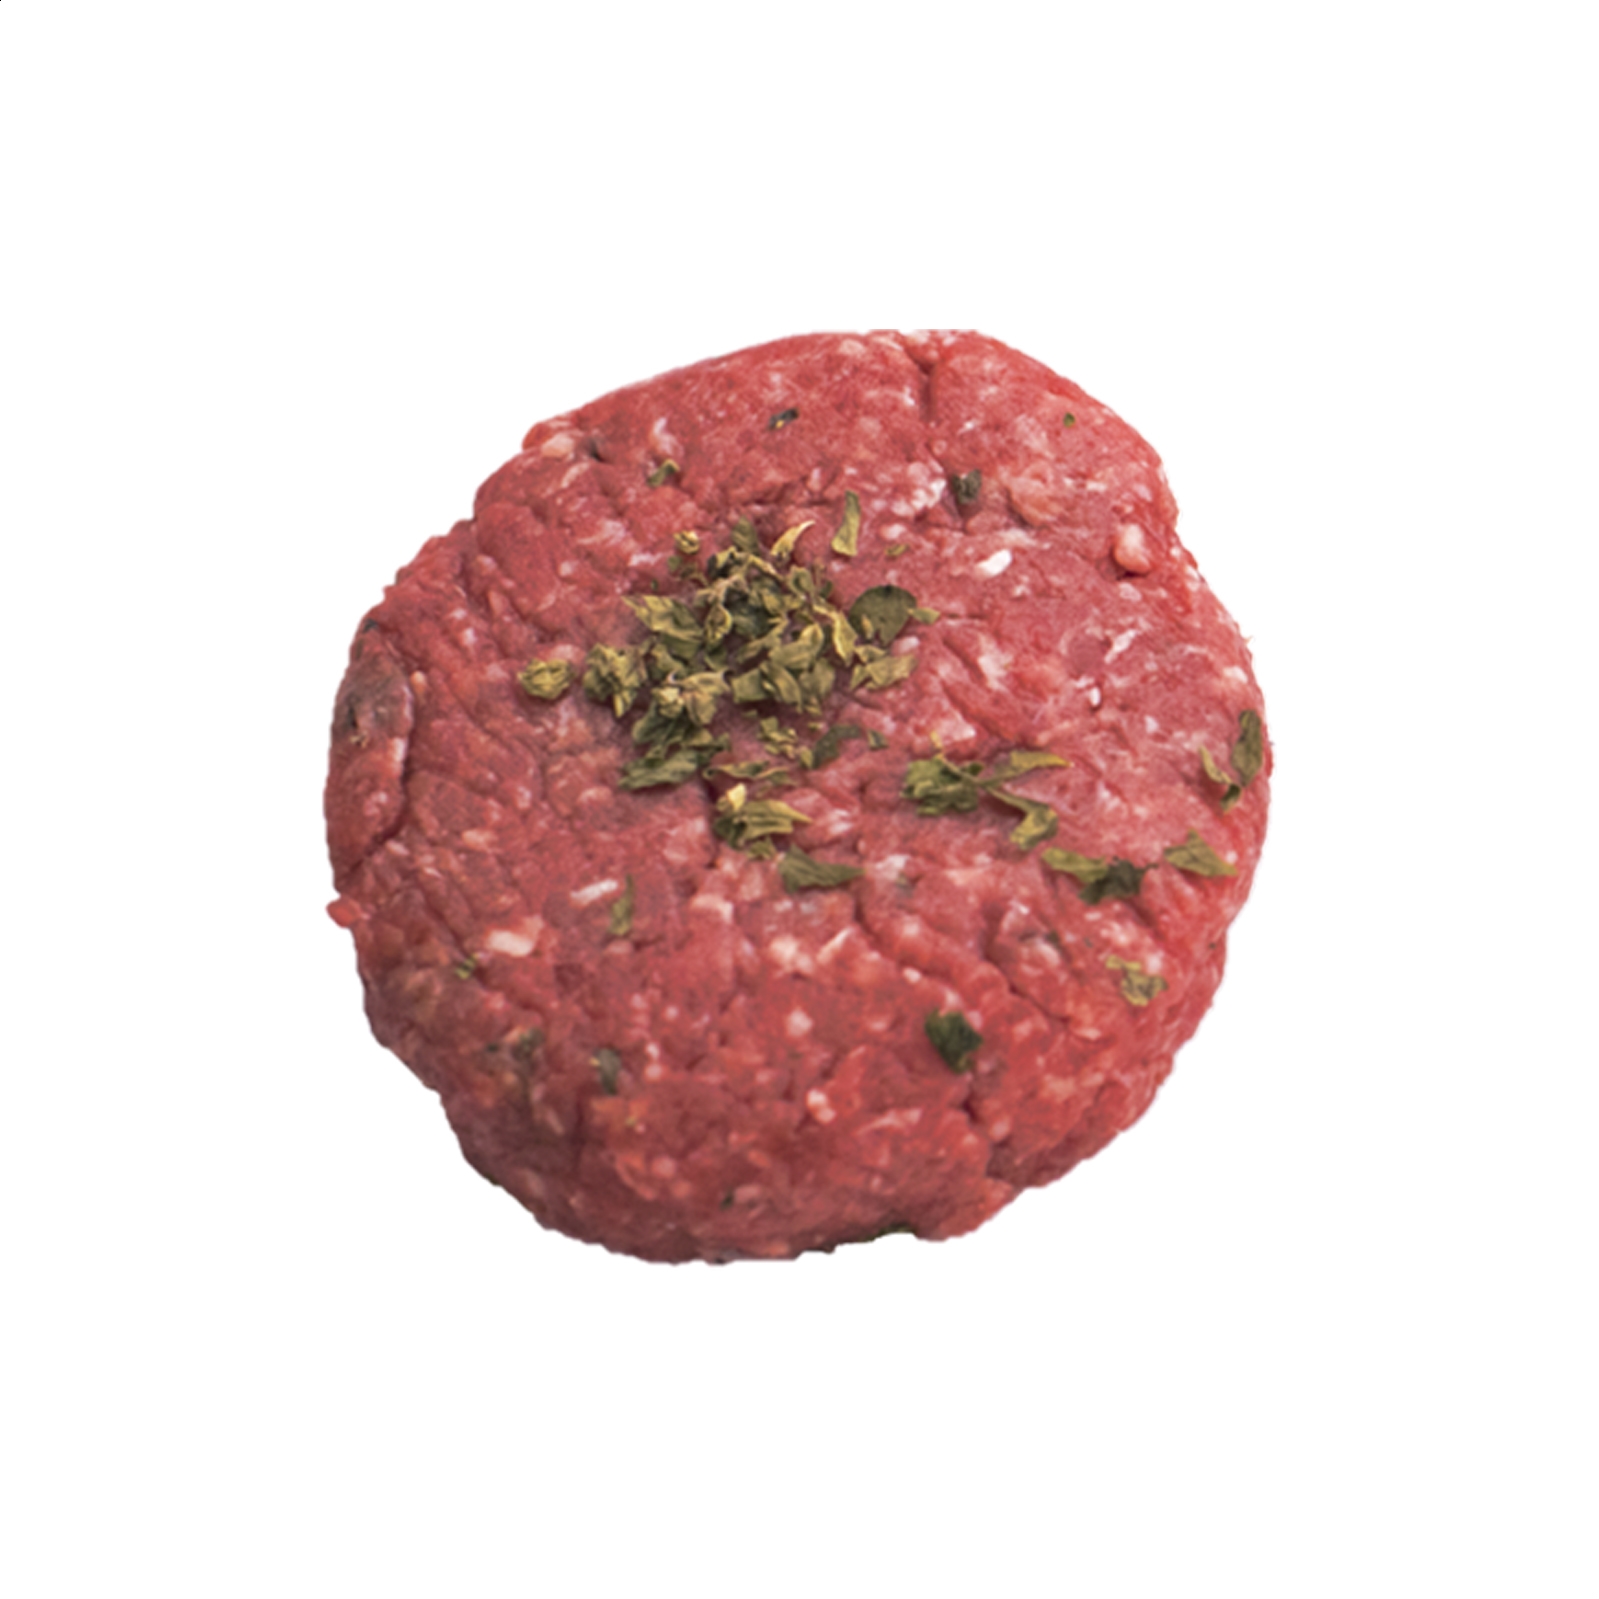 Carne a la piedra – 1 kg. aprox. – Casa Gutier – Carne de Ternera Premium